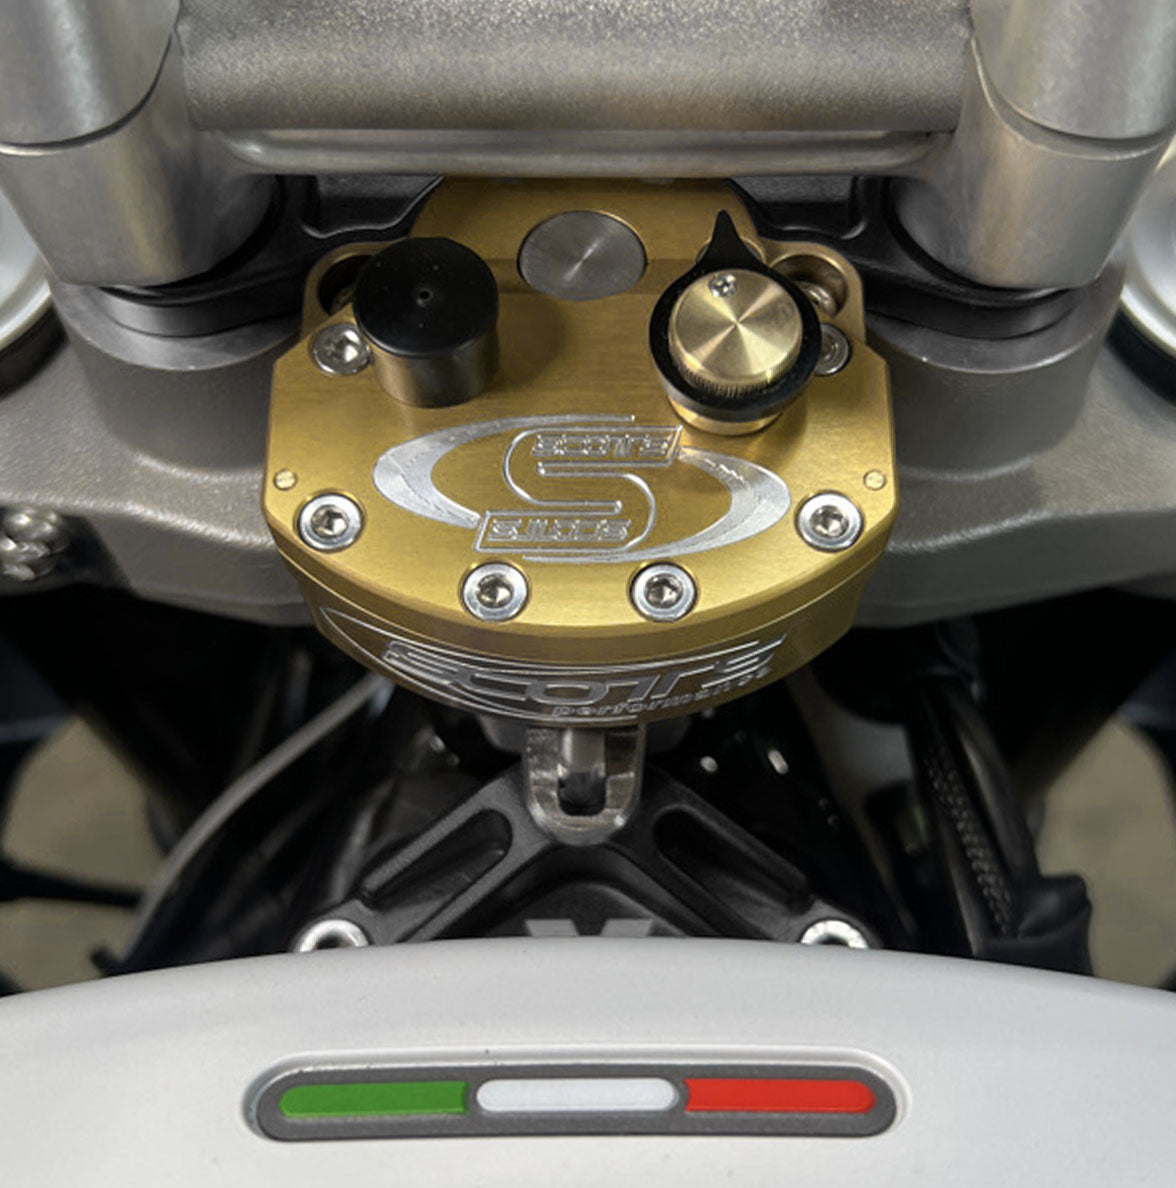 Steering damper kit for the Ducati Desert X. Ducati Desert X steering stabilizer. Desert X performance parts. Ducati performance parts. Desert X adventure bike. Ducati dualsport motorcycle. Offroad performance improvements for the Ducati Desert X.